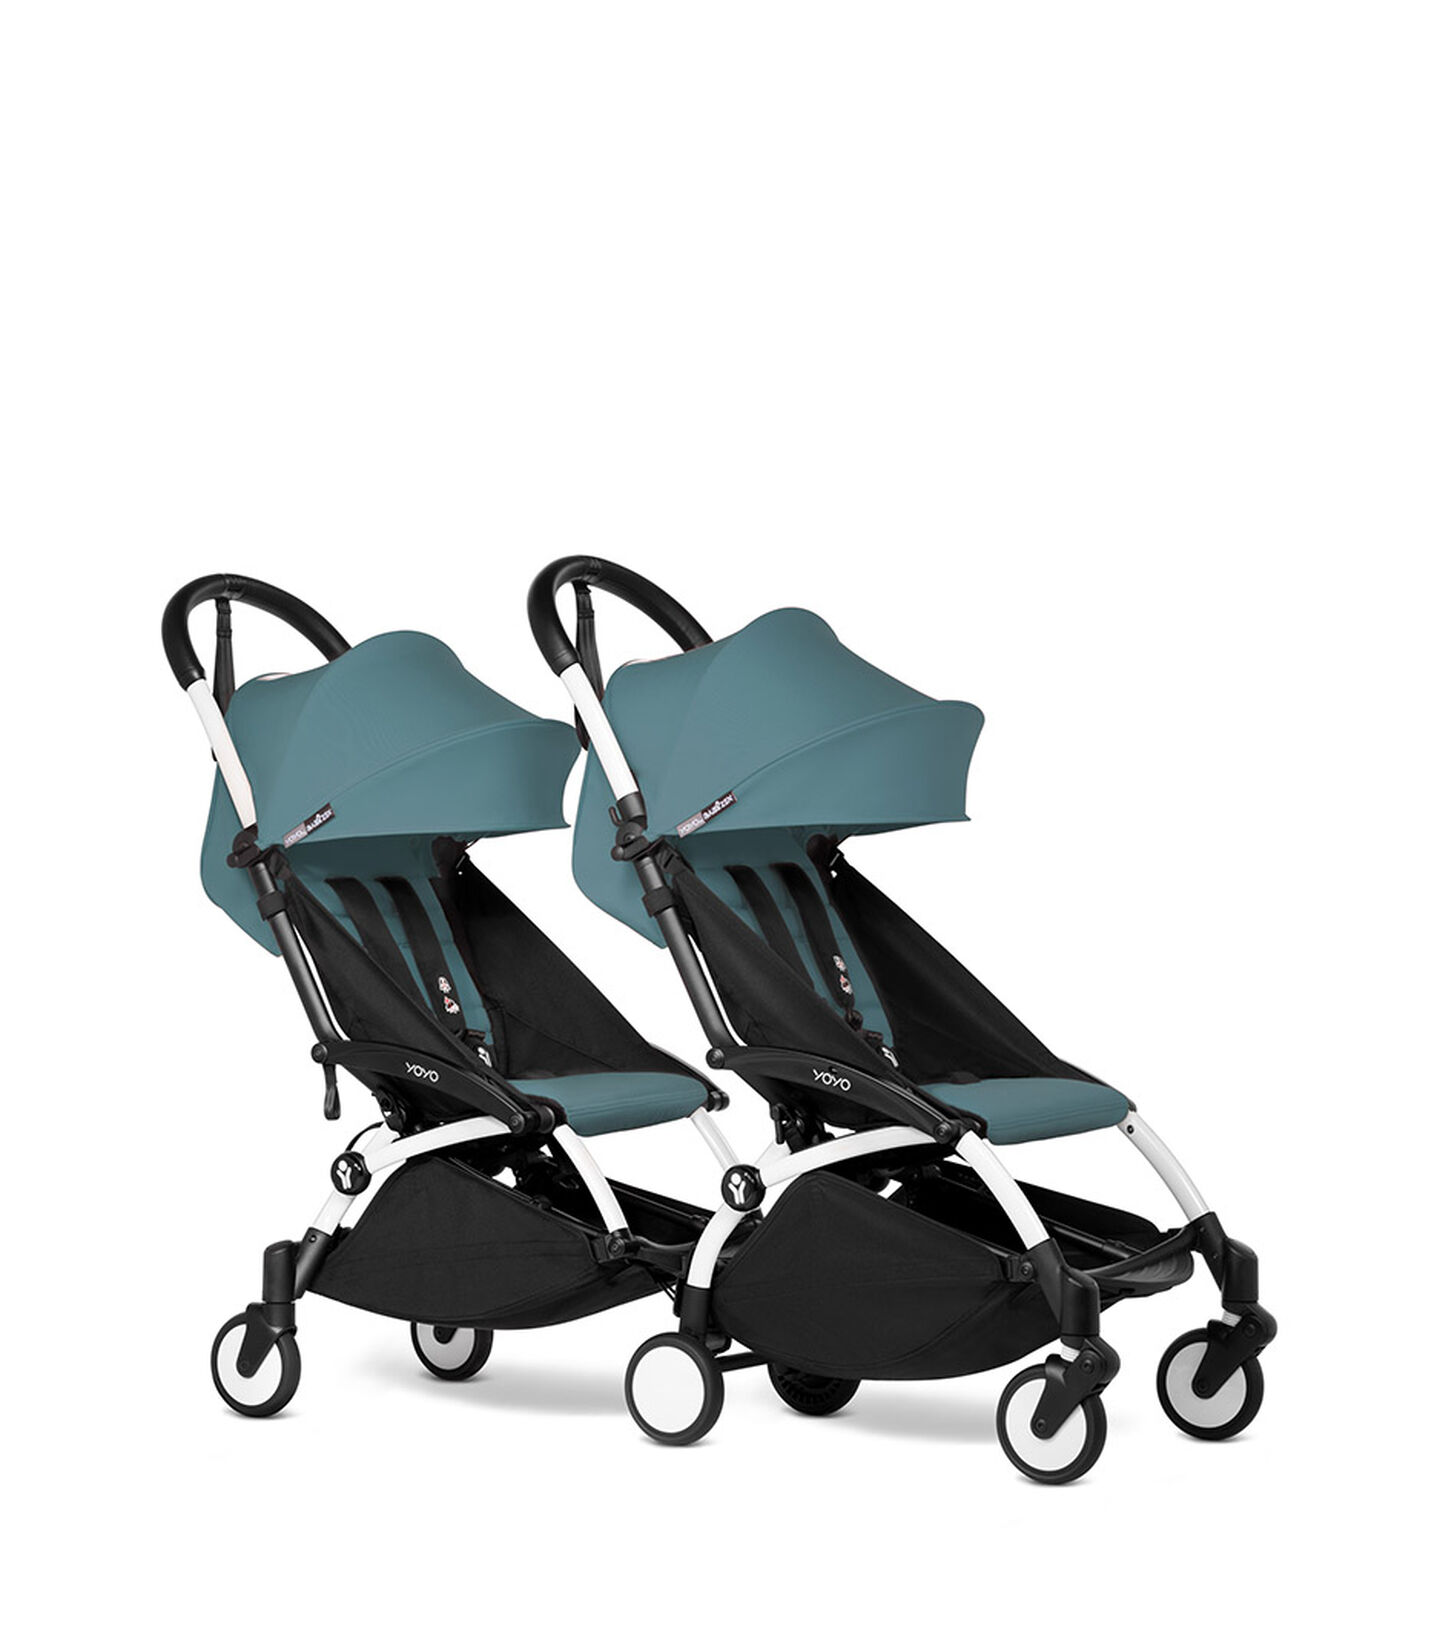 Stroller for toddler | BABYZEN™ stroller YOYO connect